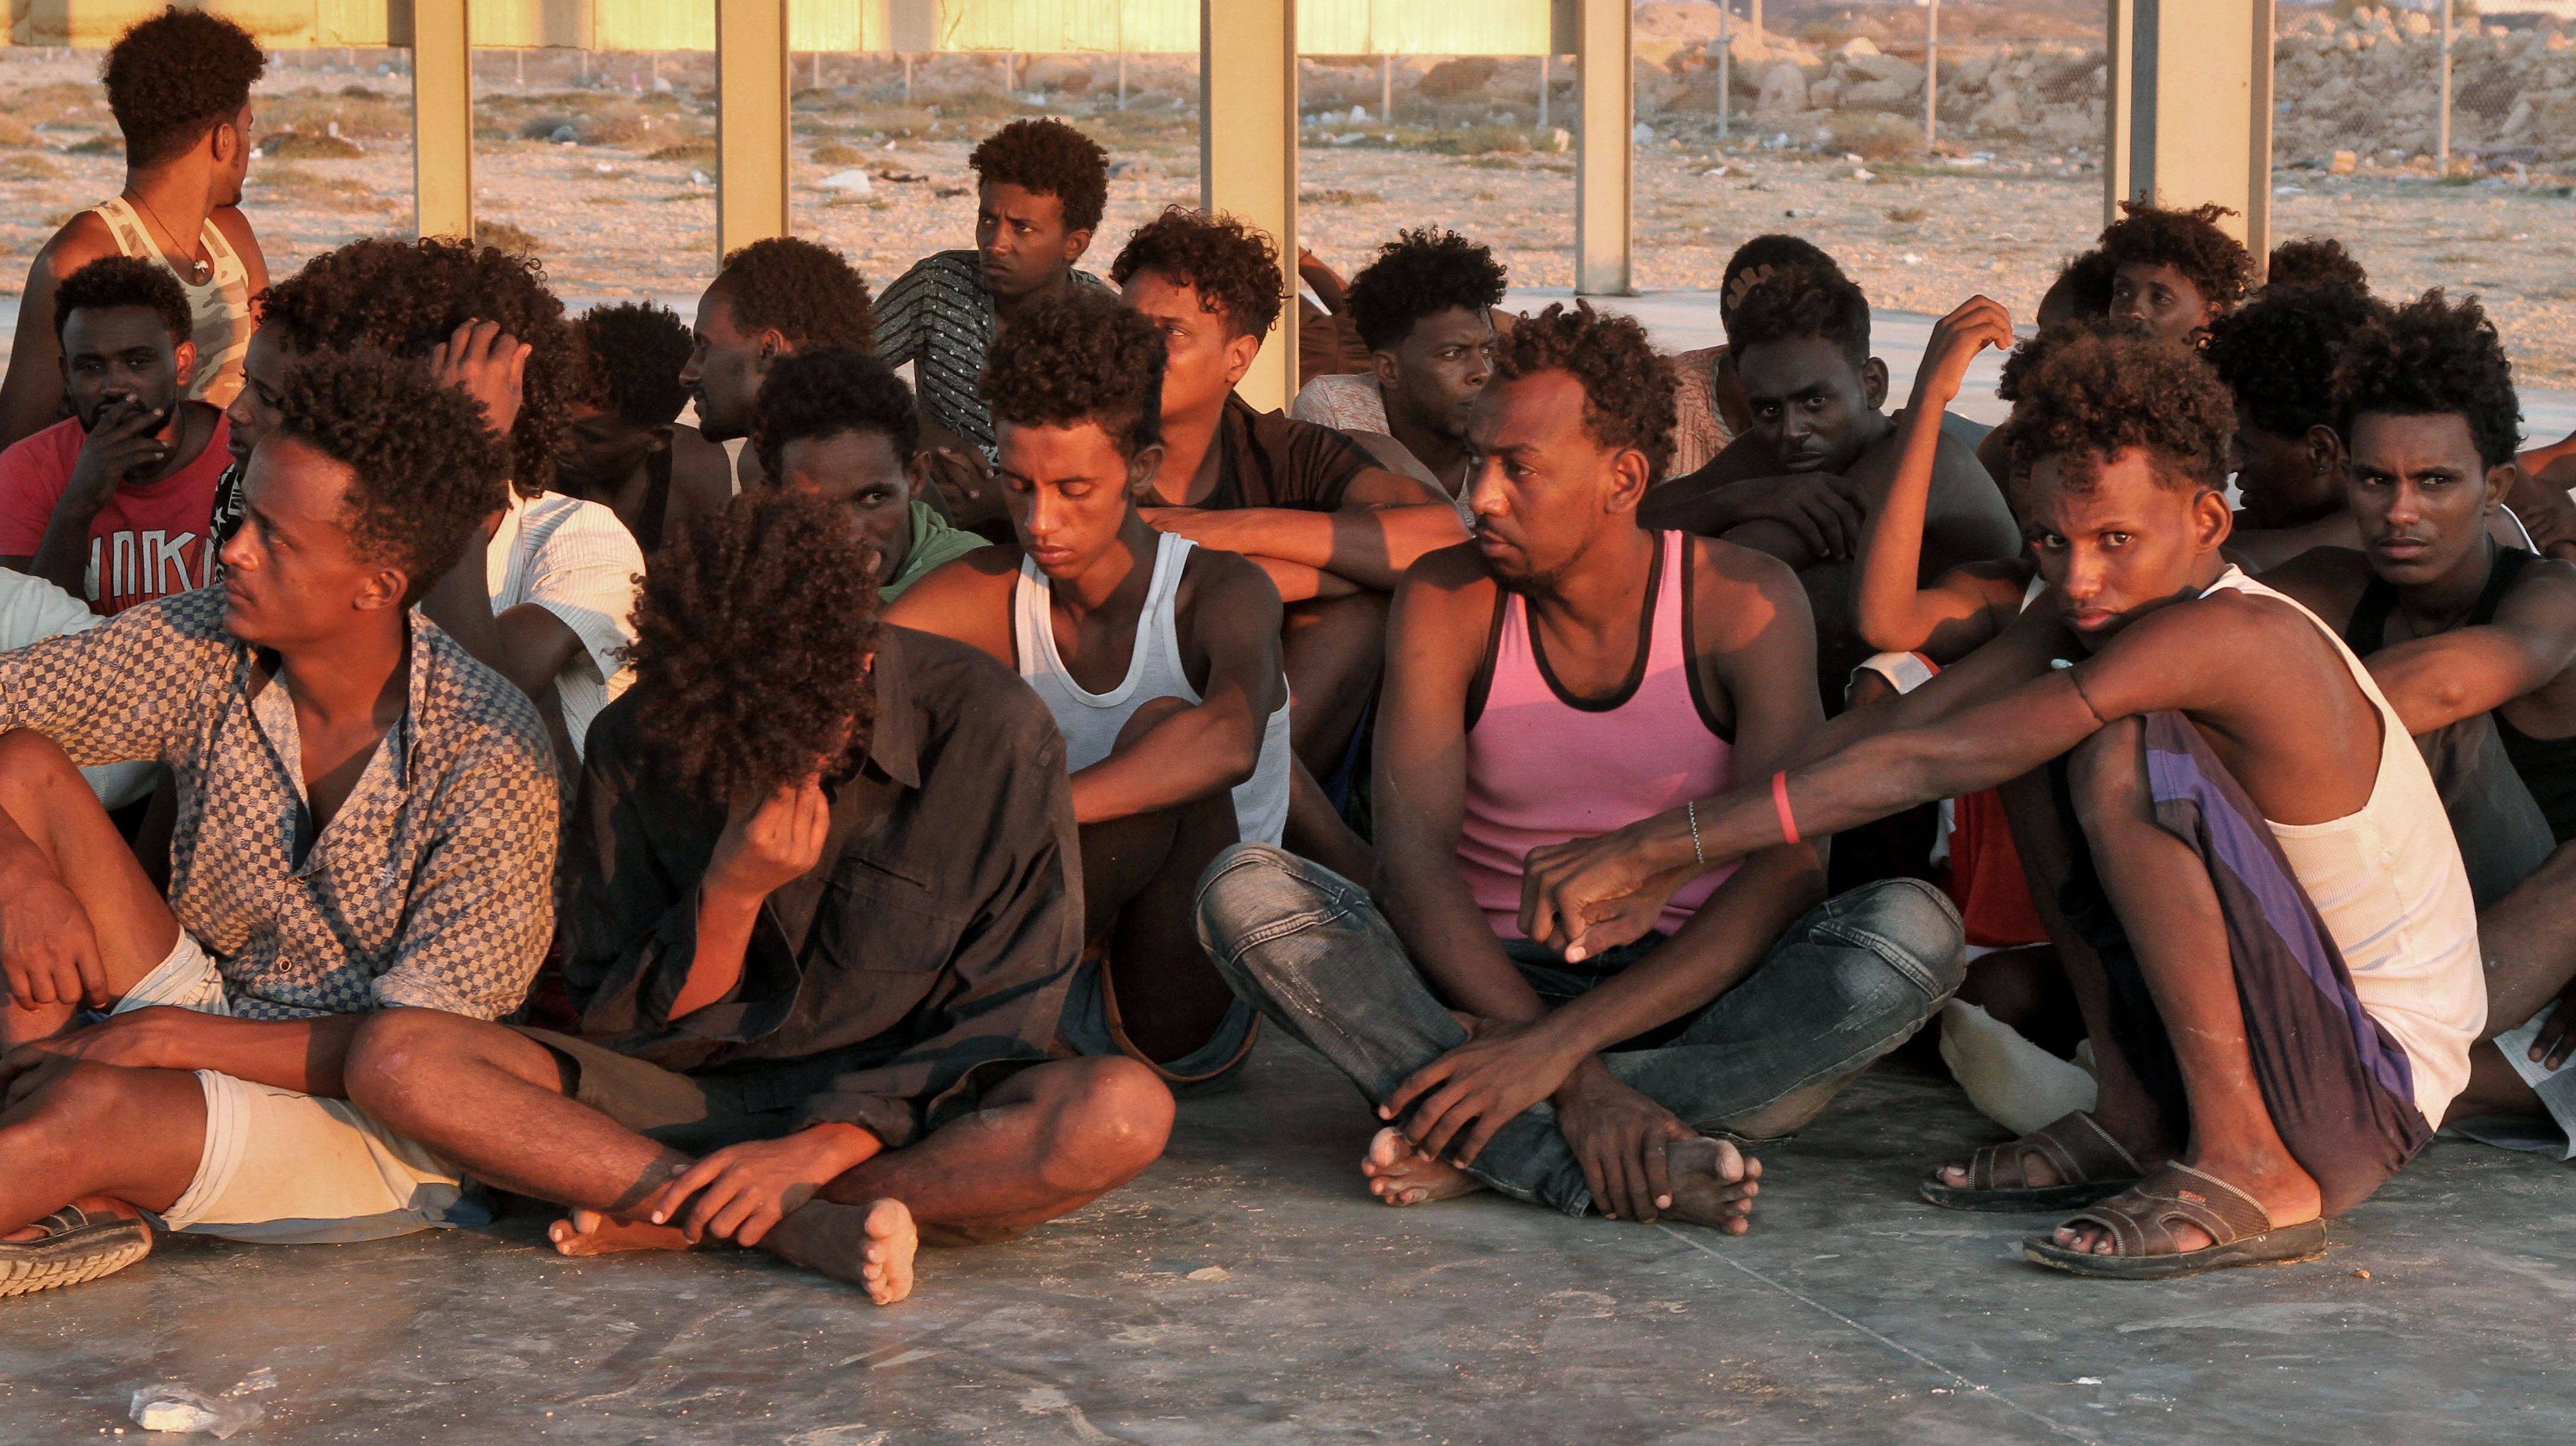 271 Illegal Migrants Rescued Off Libyan Coast in Past Week